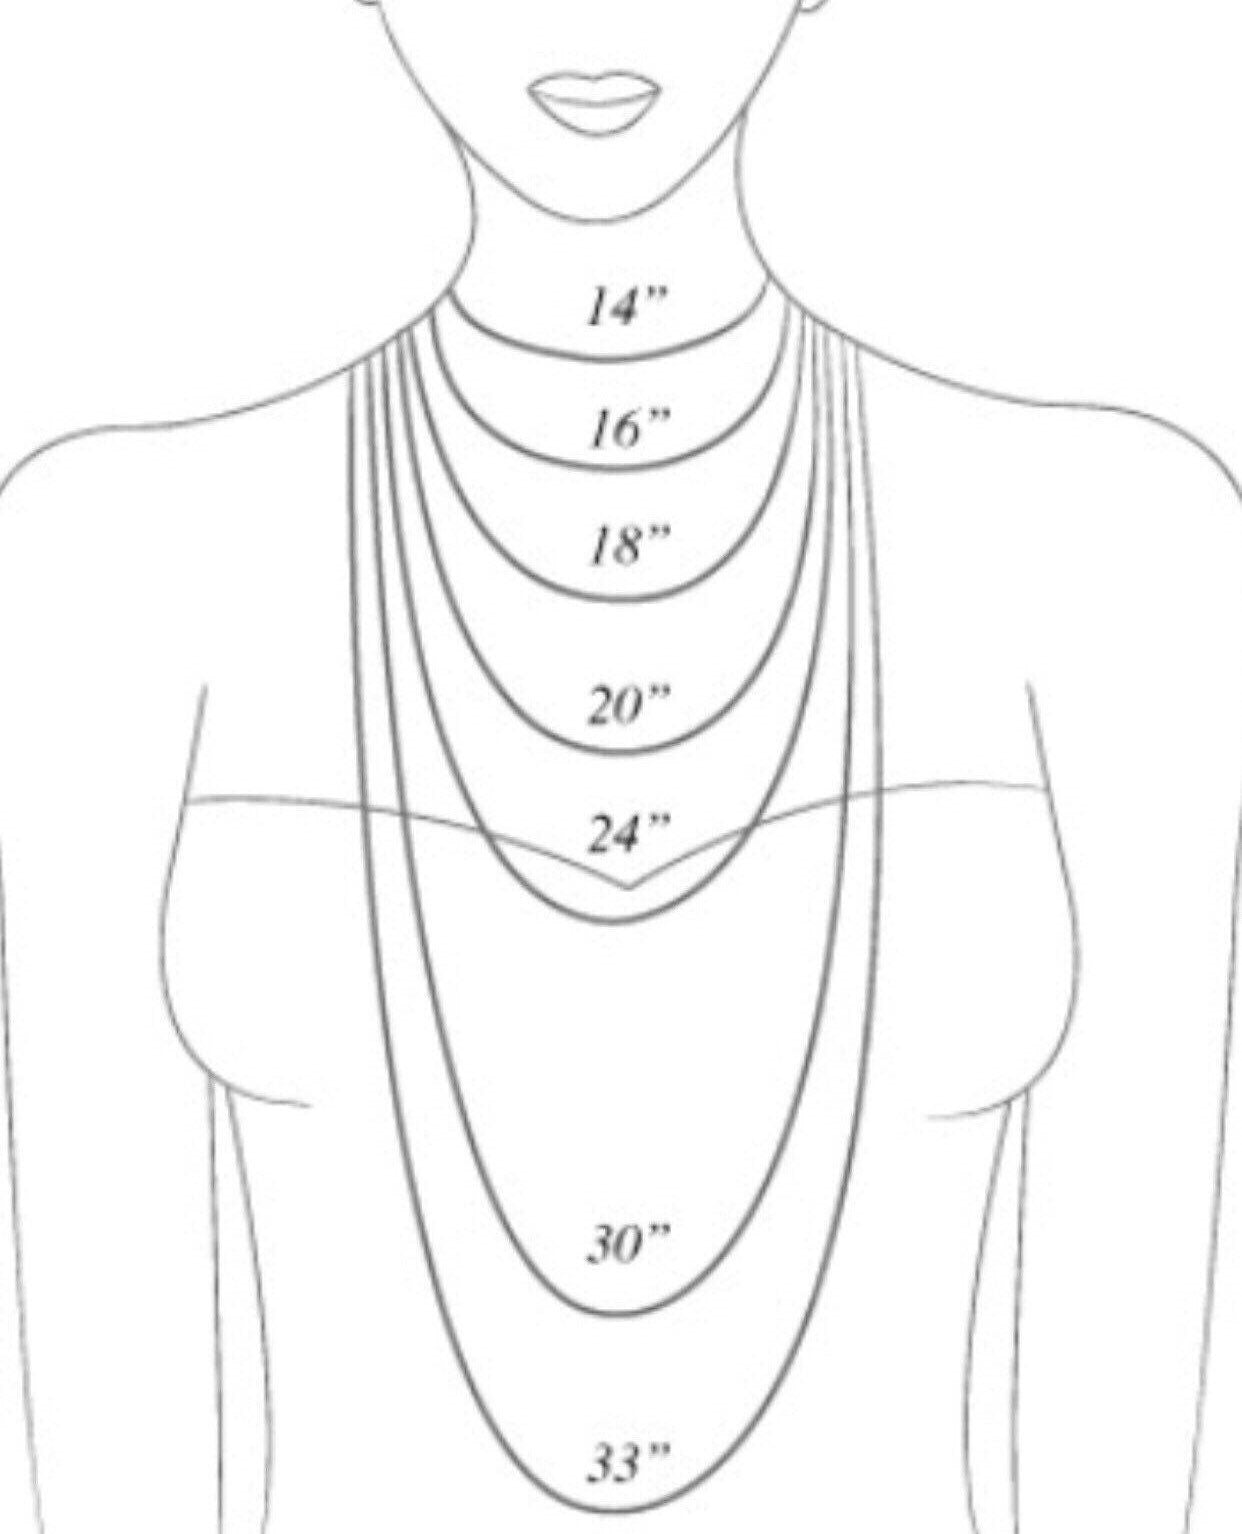 Black Onyx Heart Necklace, Heart Lock Necklace, Heart Shaped Pendant, Black Heart Pendant, Love Stone Necklace, Onyx Gemstone Necklace